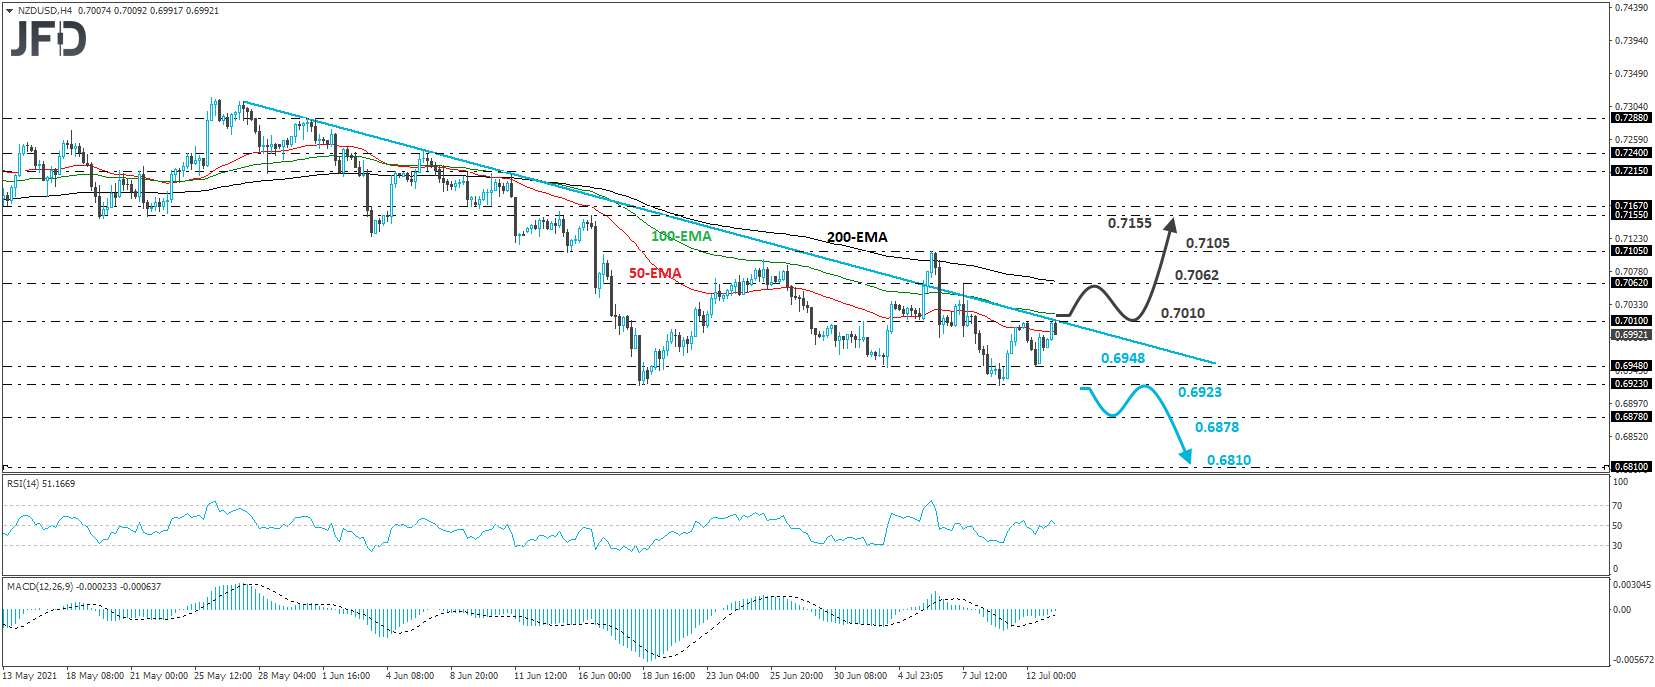 NZD/USD 4-hour chart technical analysis